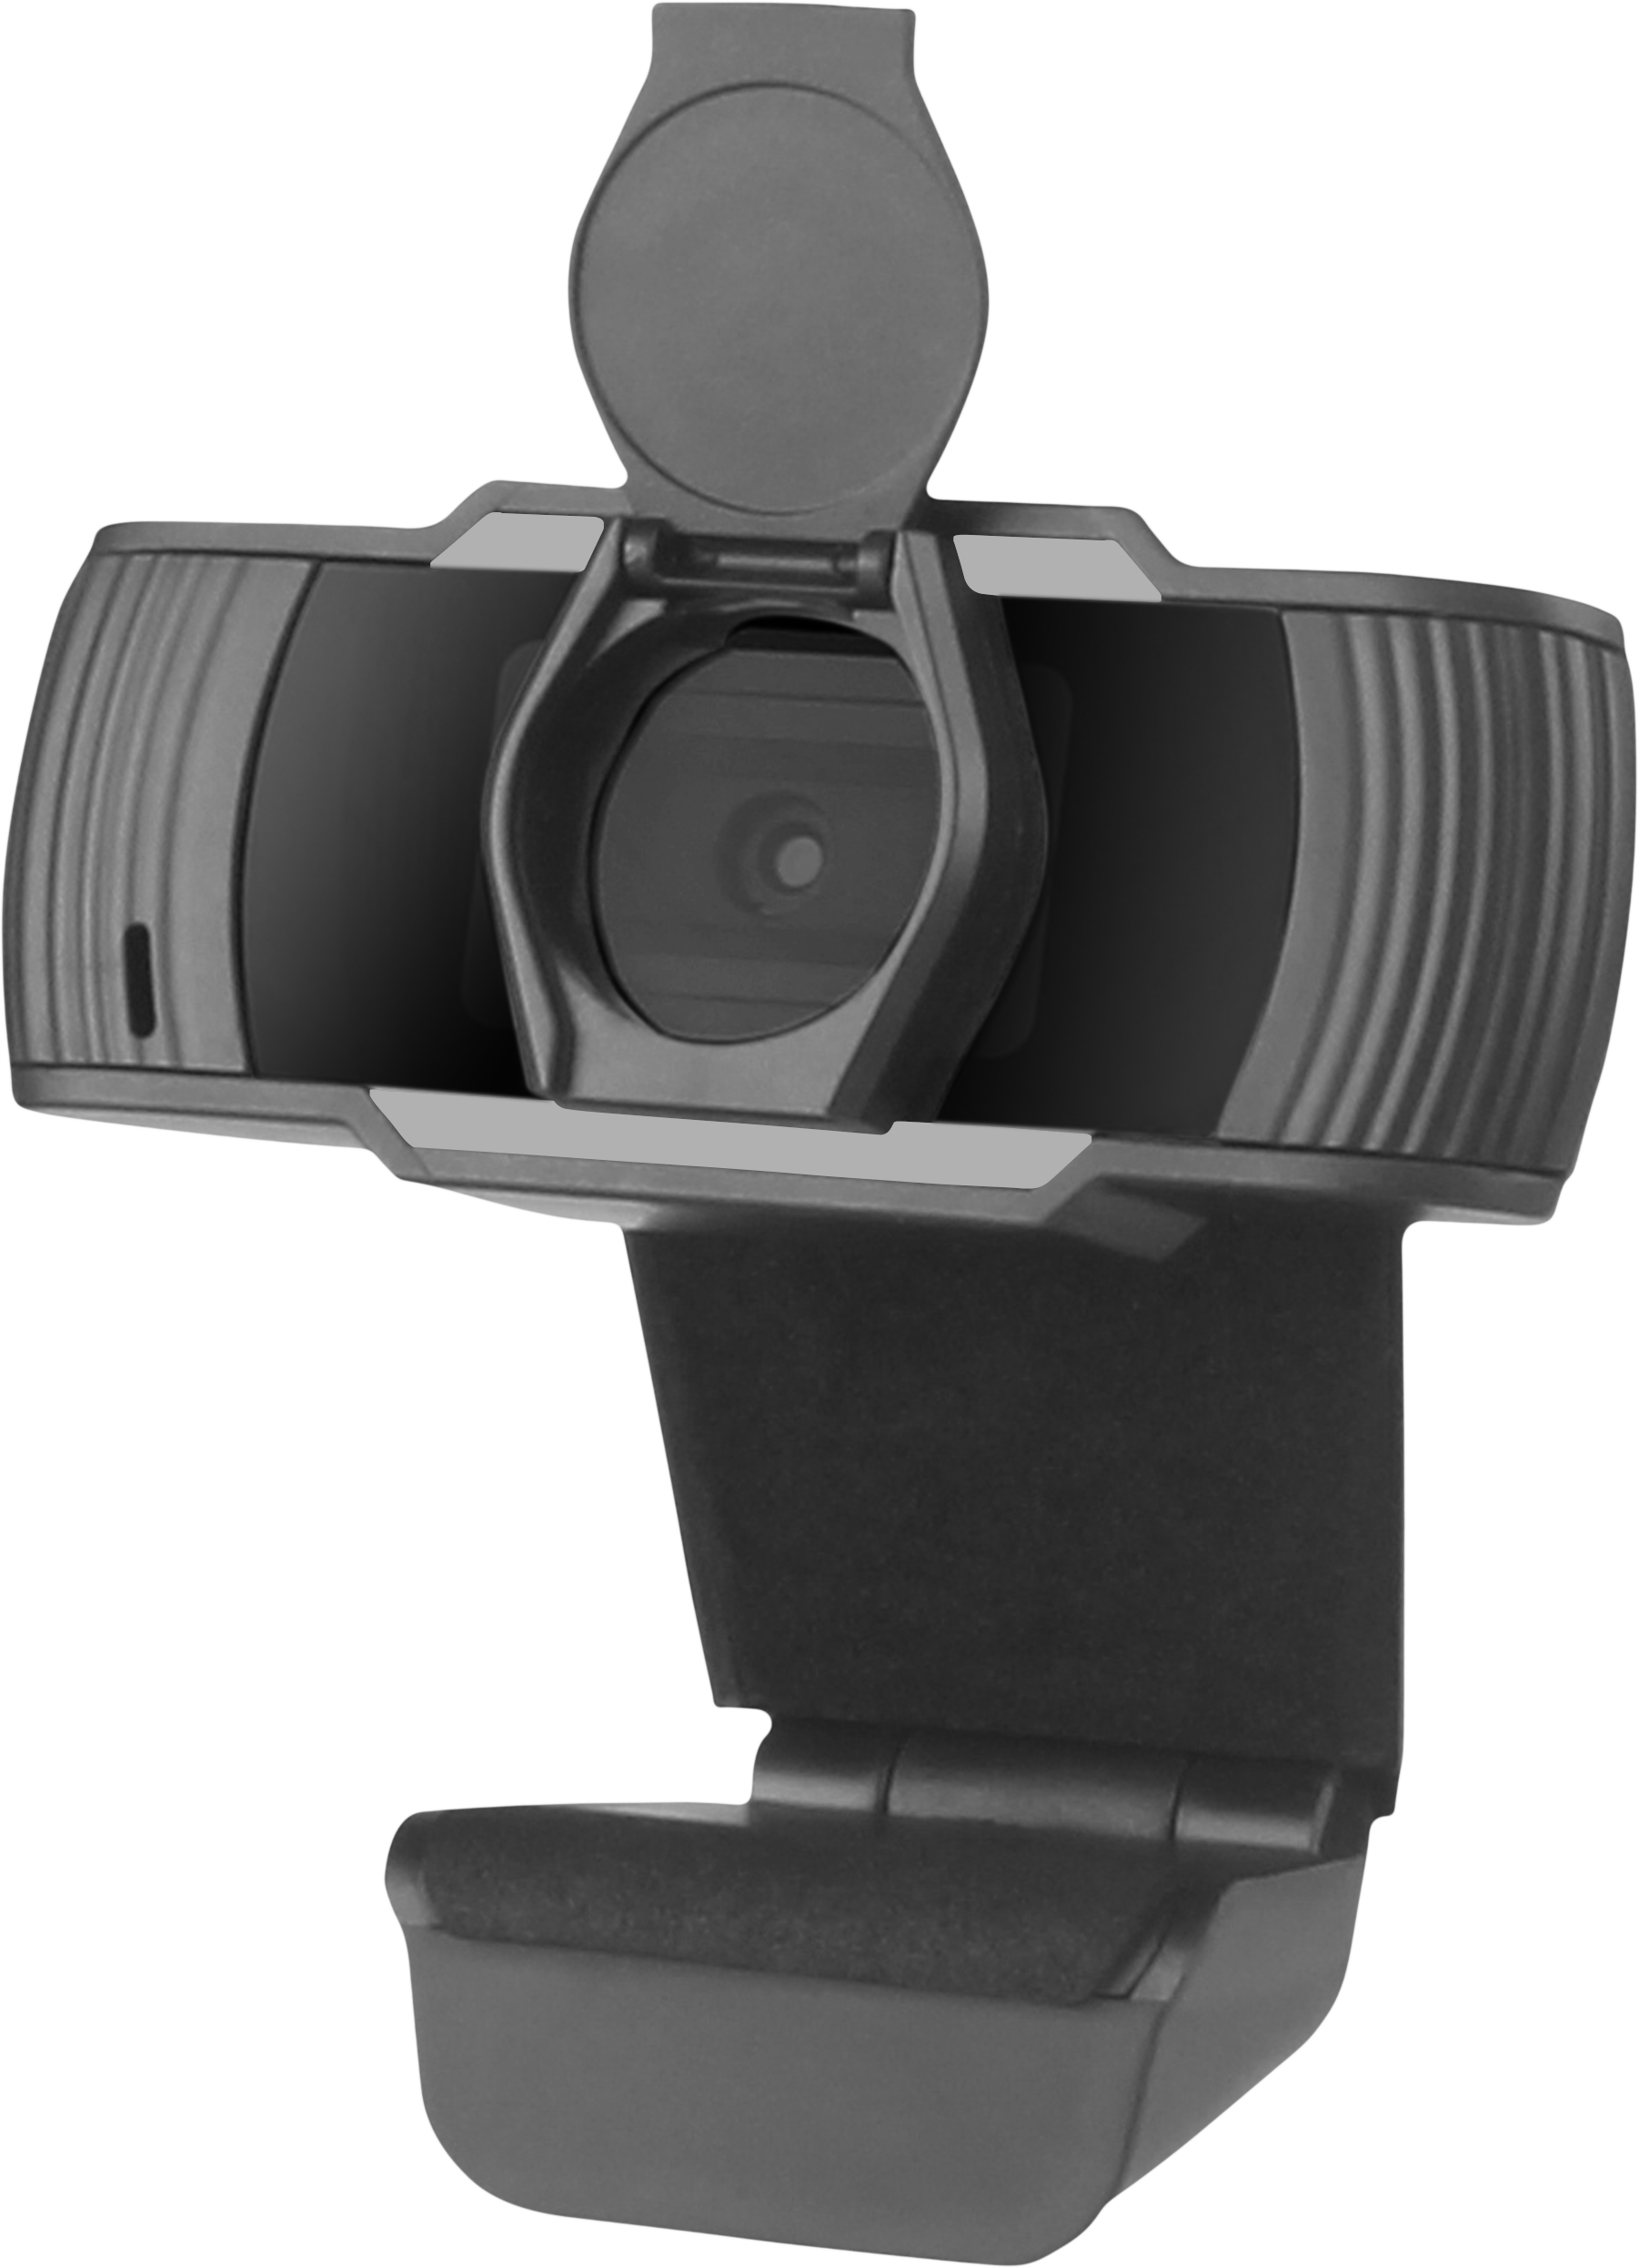 RECIT Webcam 720p HD, black